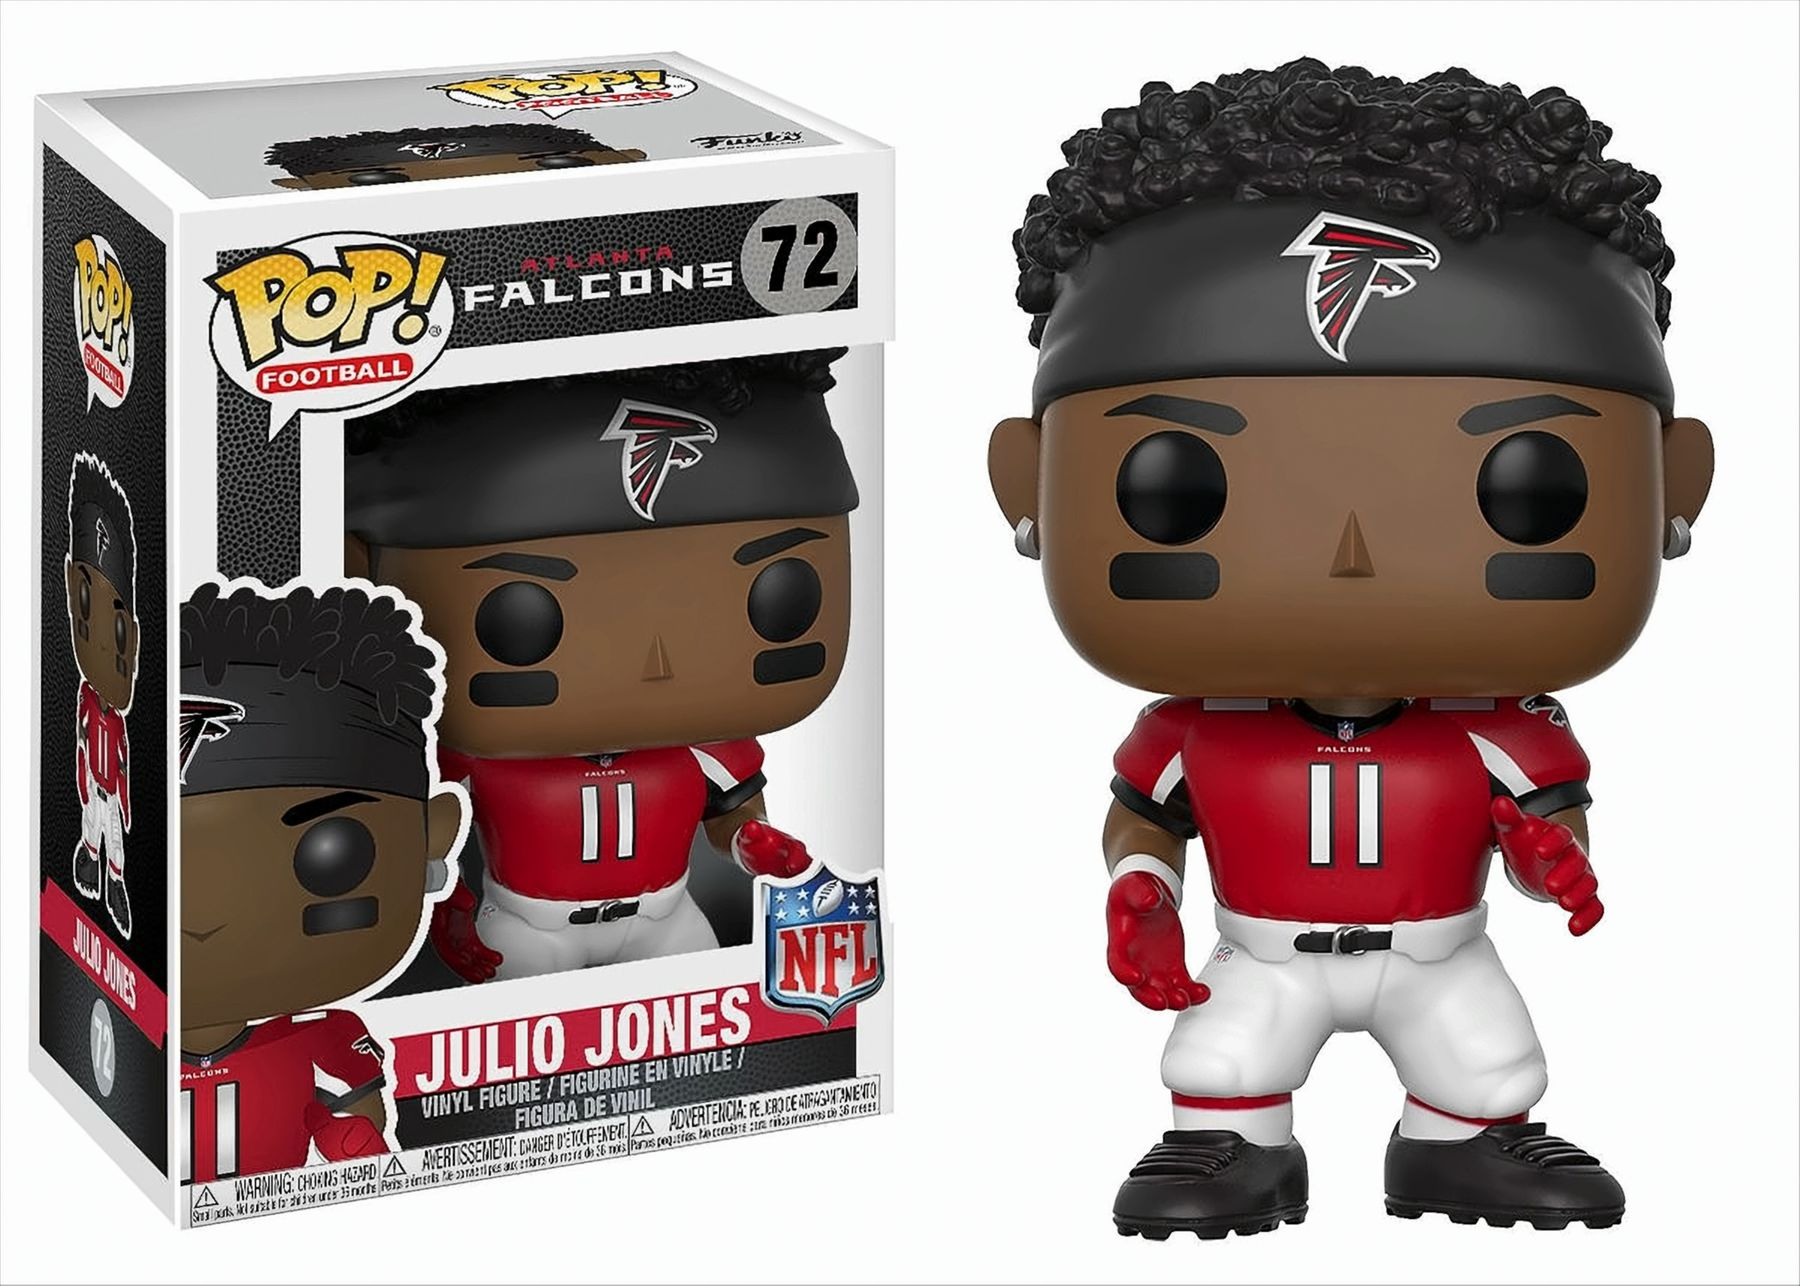 Funko POP Football NFL Falcons Jones - Atlanta Julio